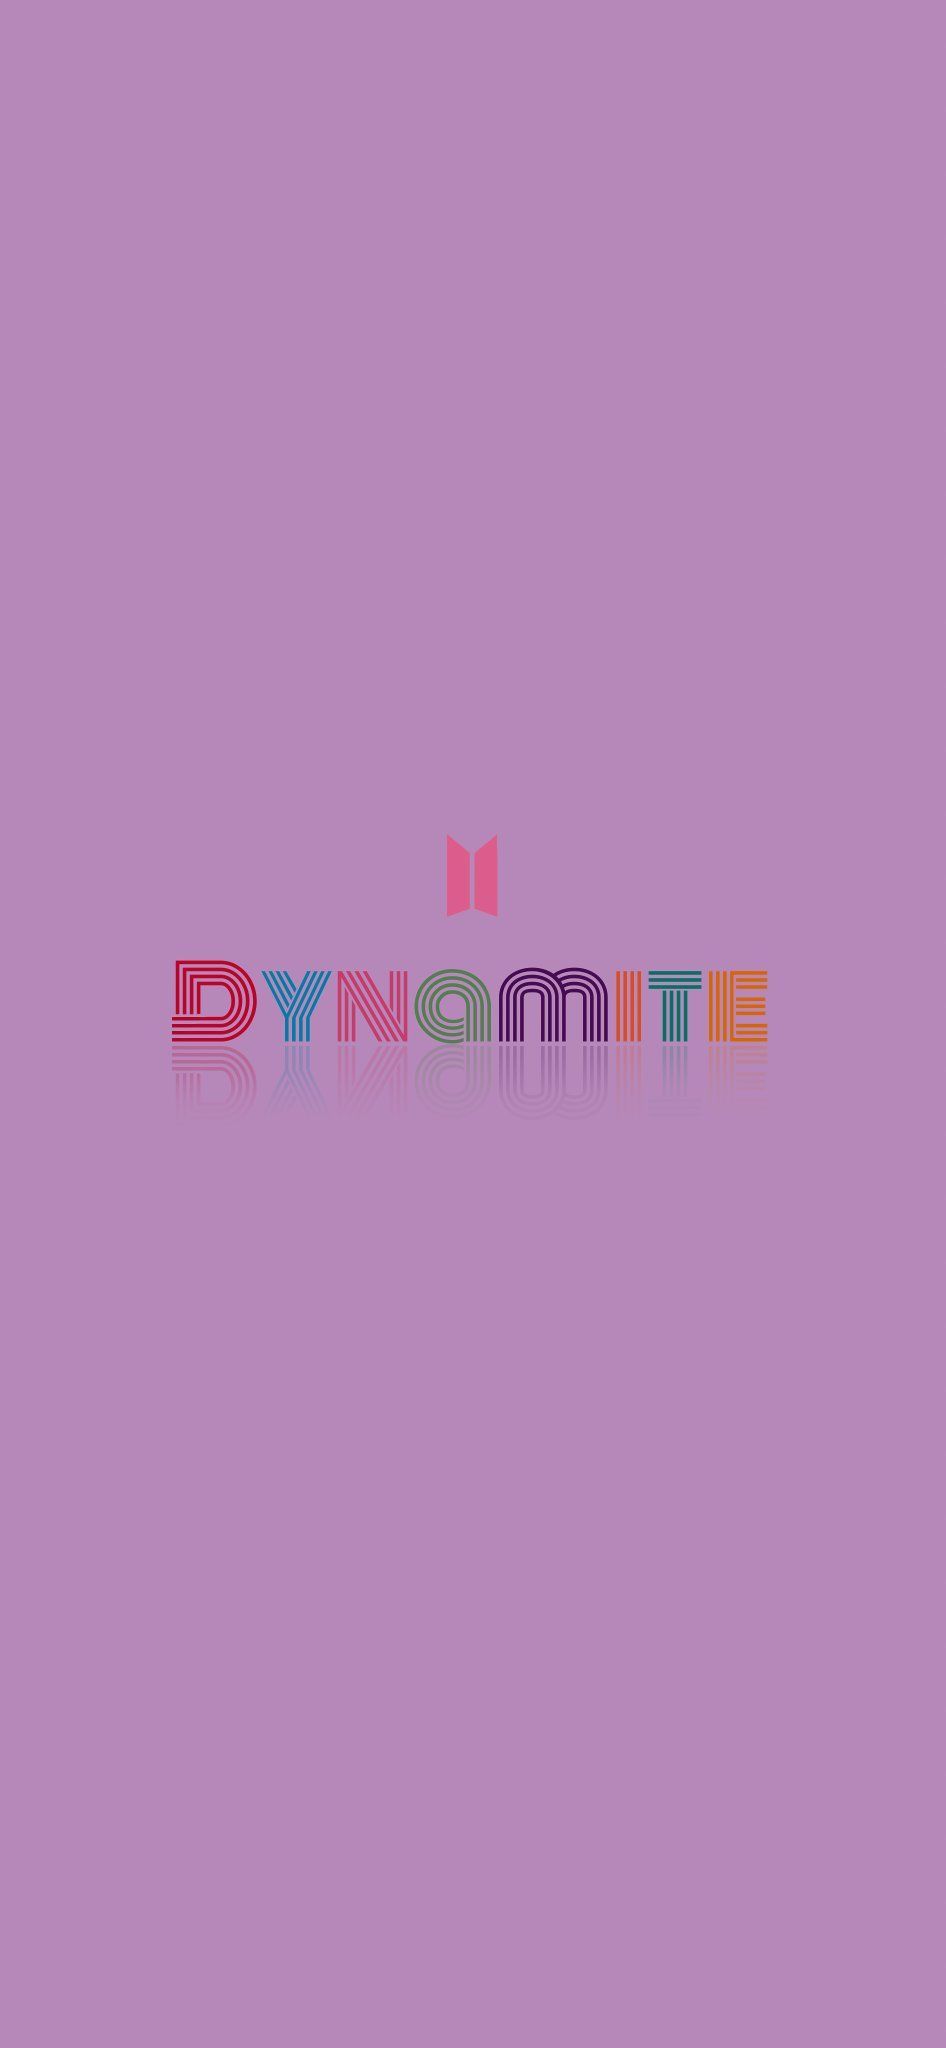 BTS Dynamite Wallpaper Lockscreen & Edit di 2020. Wallpaper lucu